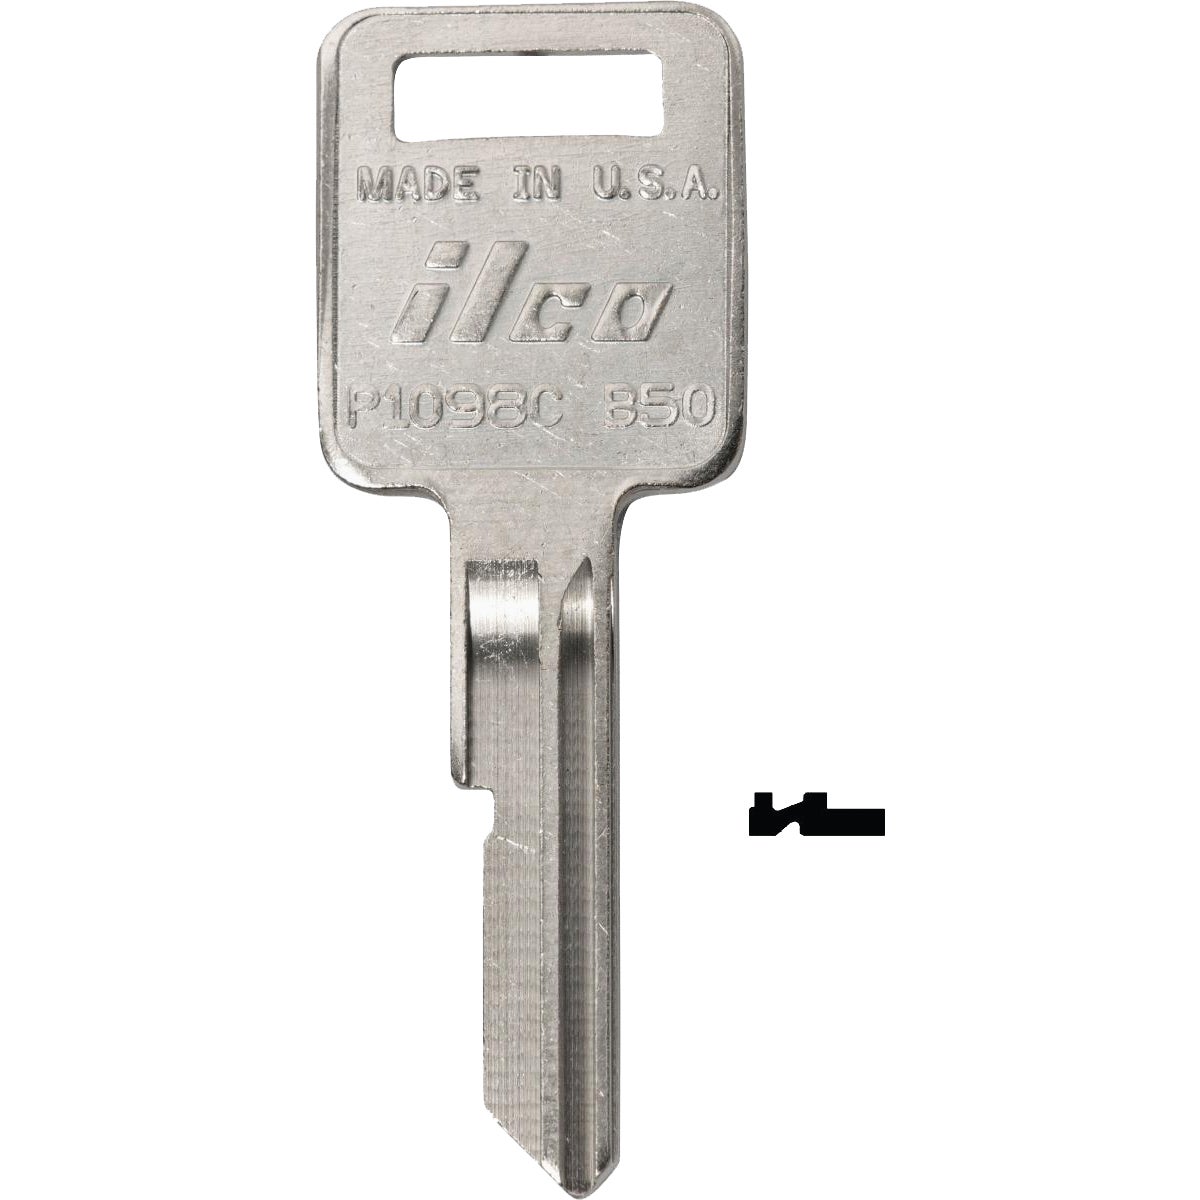 ILCO GM Nickel Plated Automotive Key, B50 / P1098C (10-Pack)